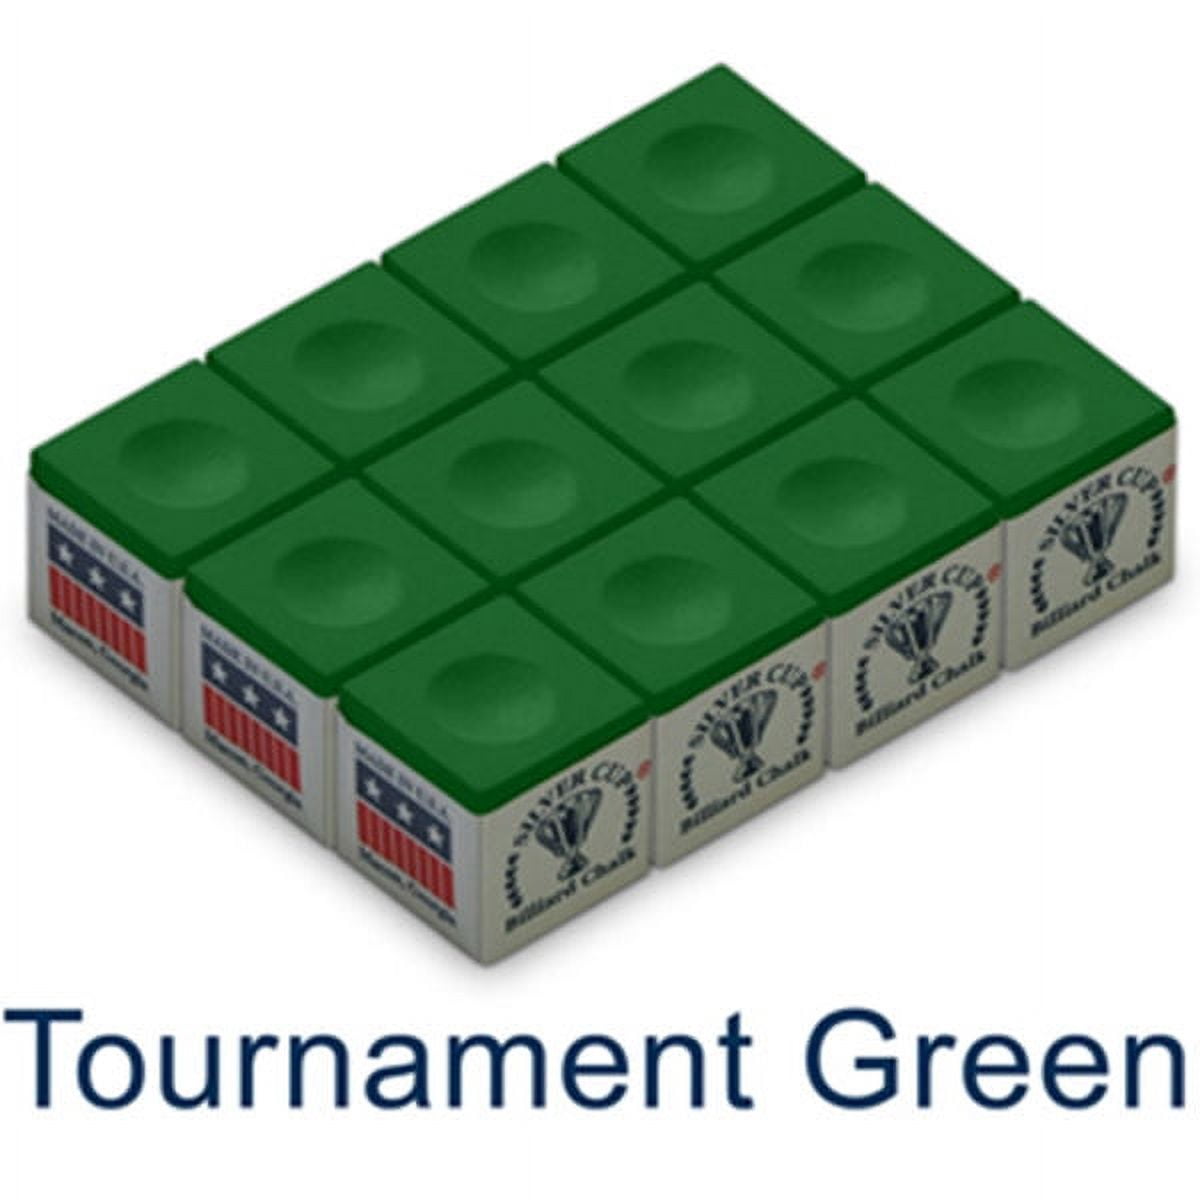 Freetime Fun Green Billiard Pool Cue Stick Chalk - 12 Pack - RB9254